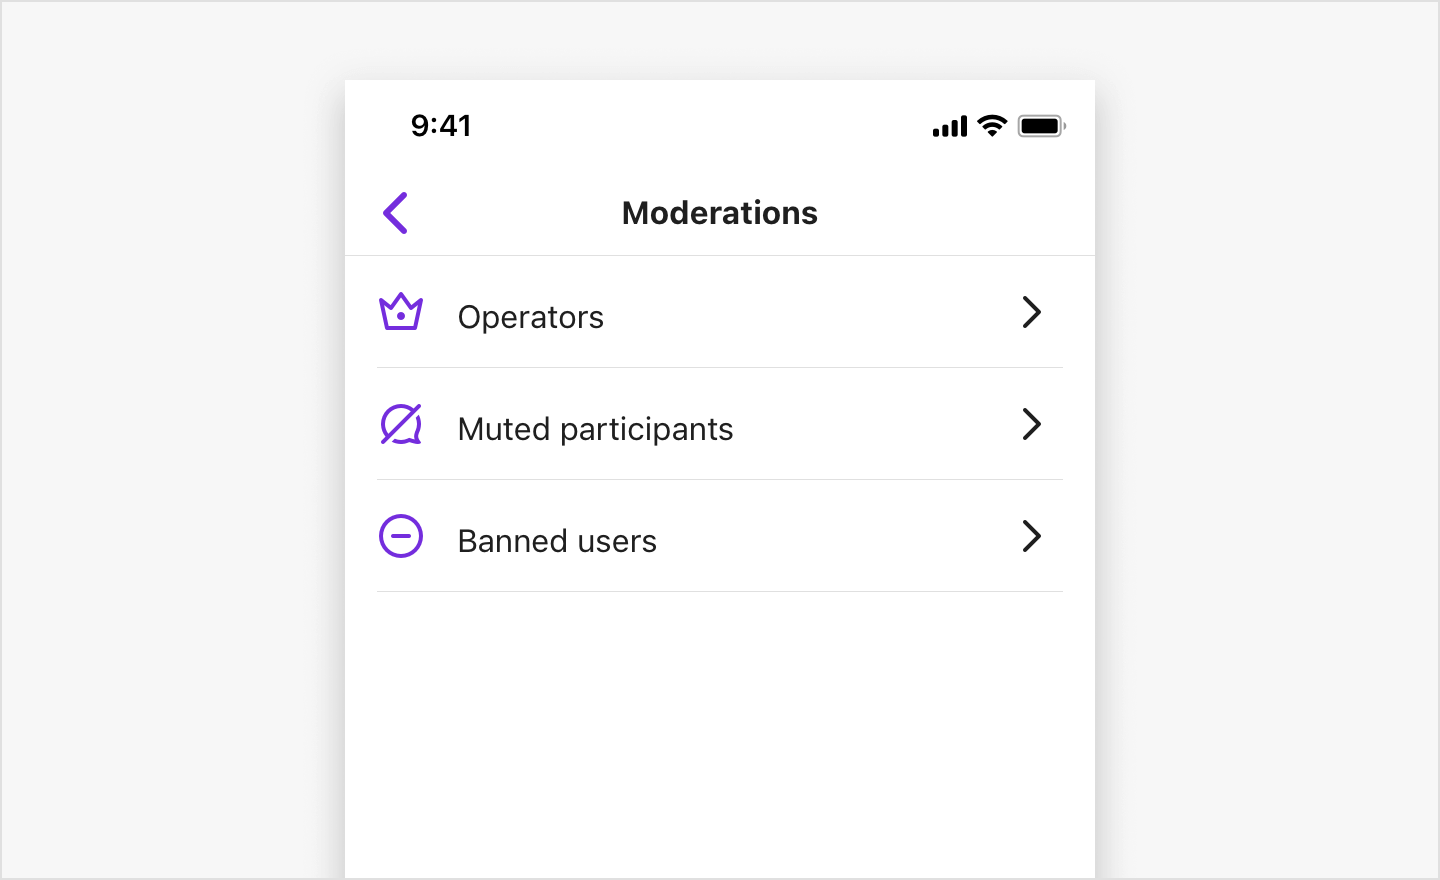 Image|Showing the moderation menu.